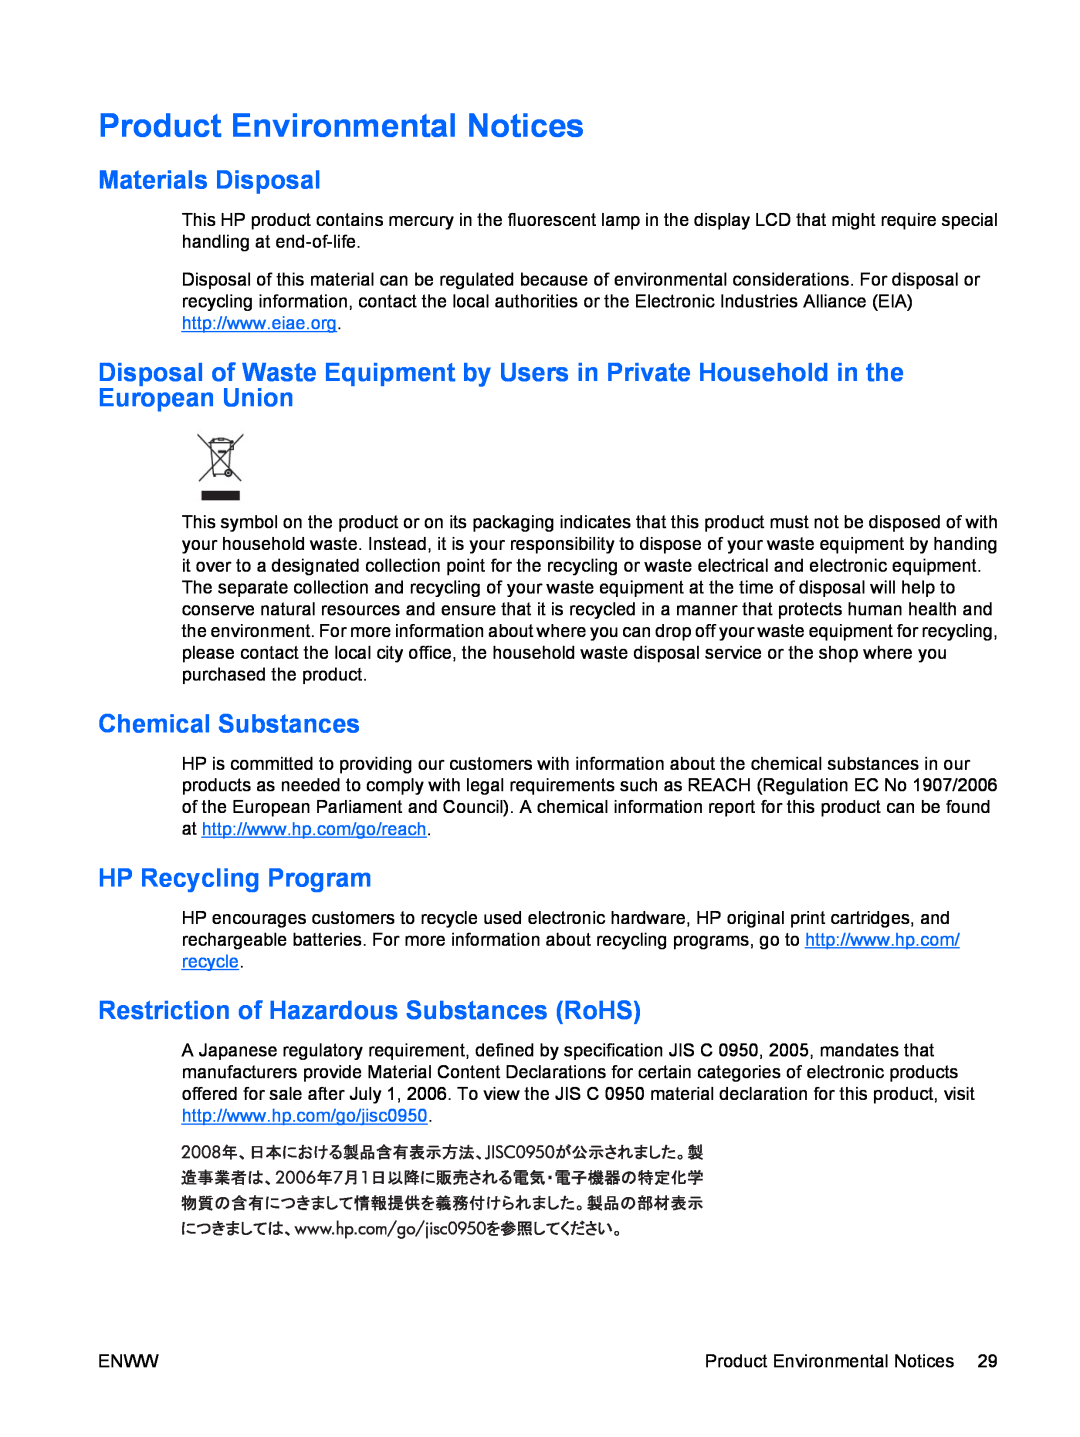 HP CQ1859E manual Product Environmental Notices, Materials Disposal, Chemical Substances, HP Recycling Program 